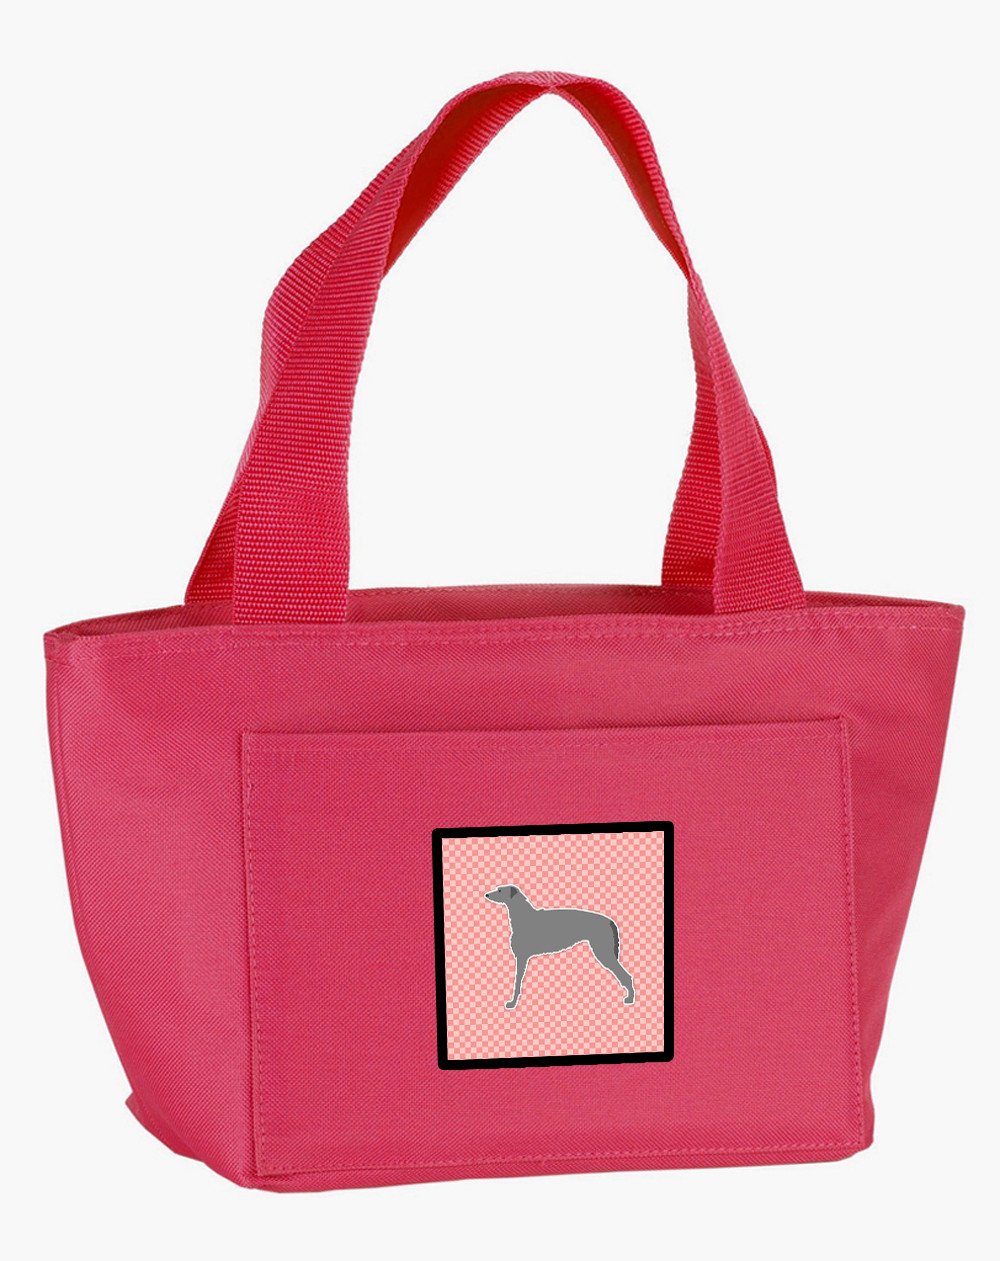 Scottish Deerhound Checkerboard Pink Lunch Bag BB3596PK-8808 by Caroline's Treasures